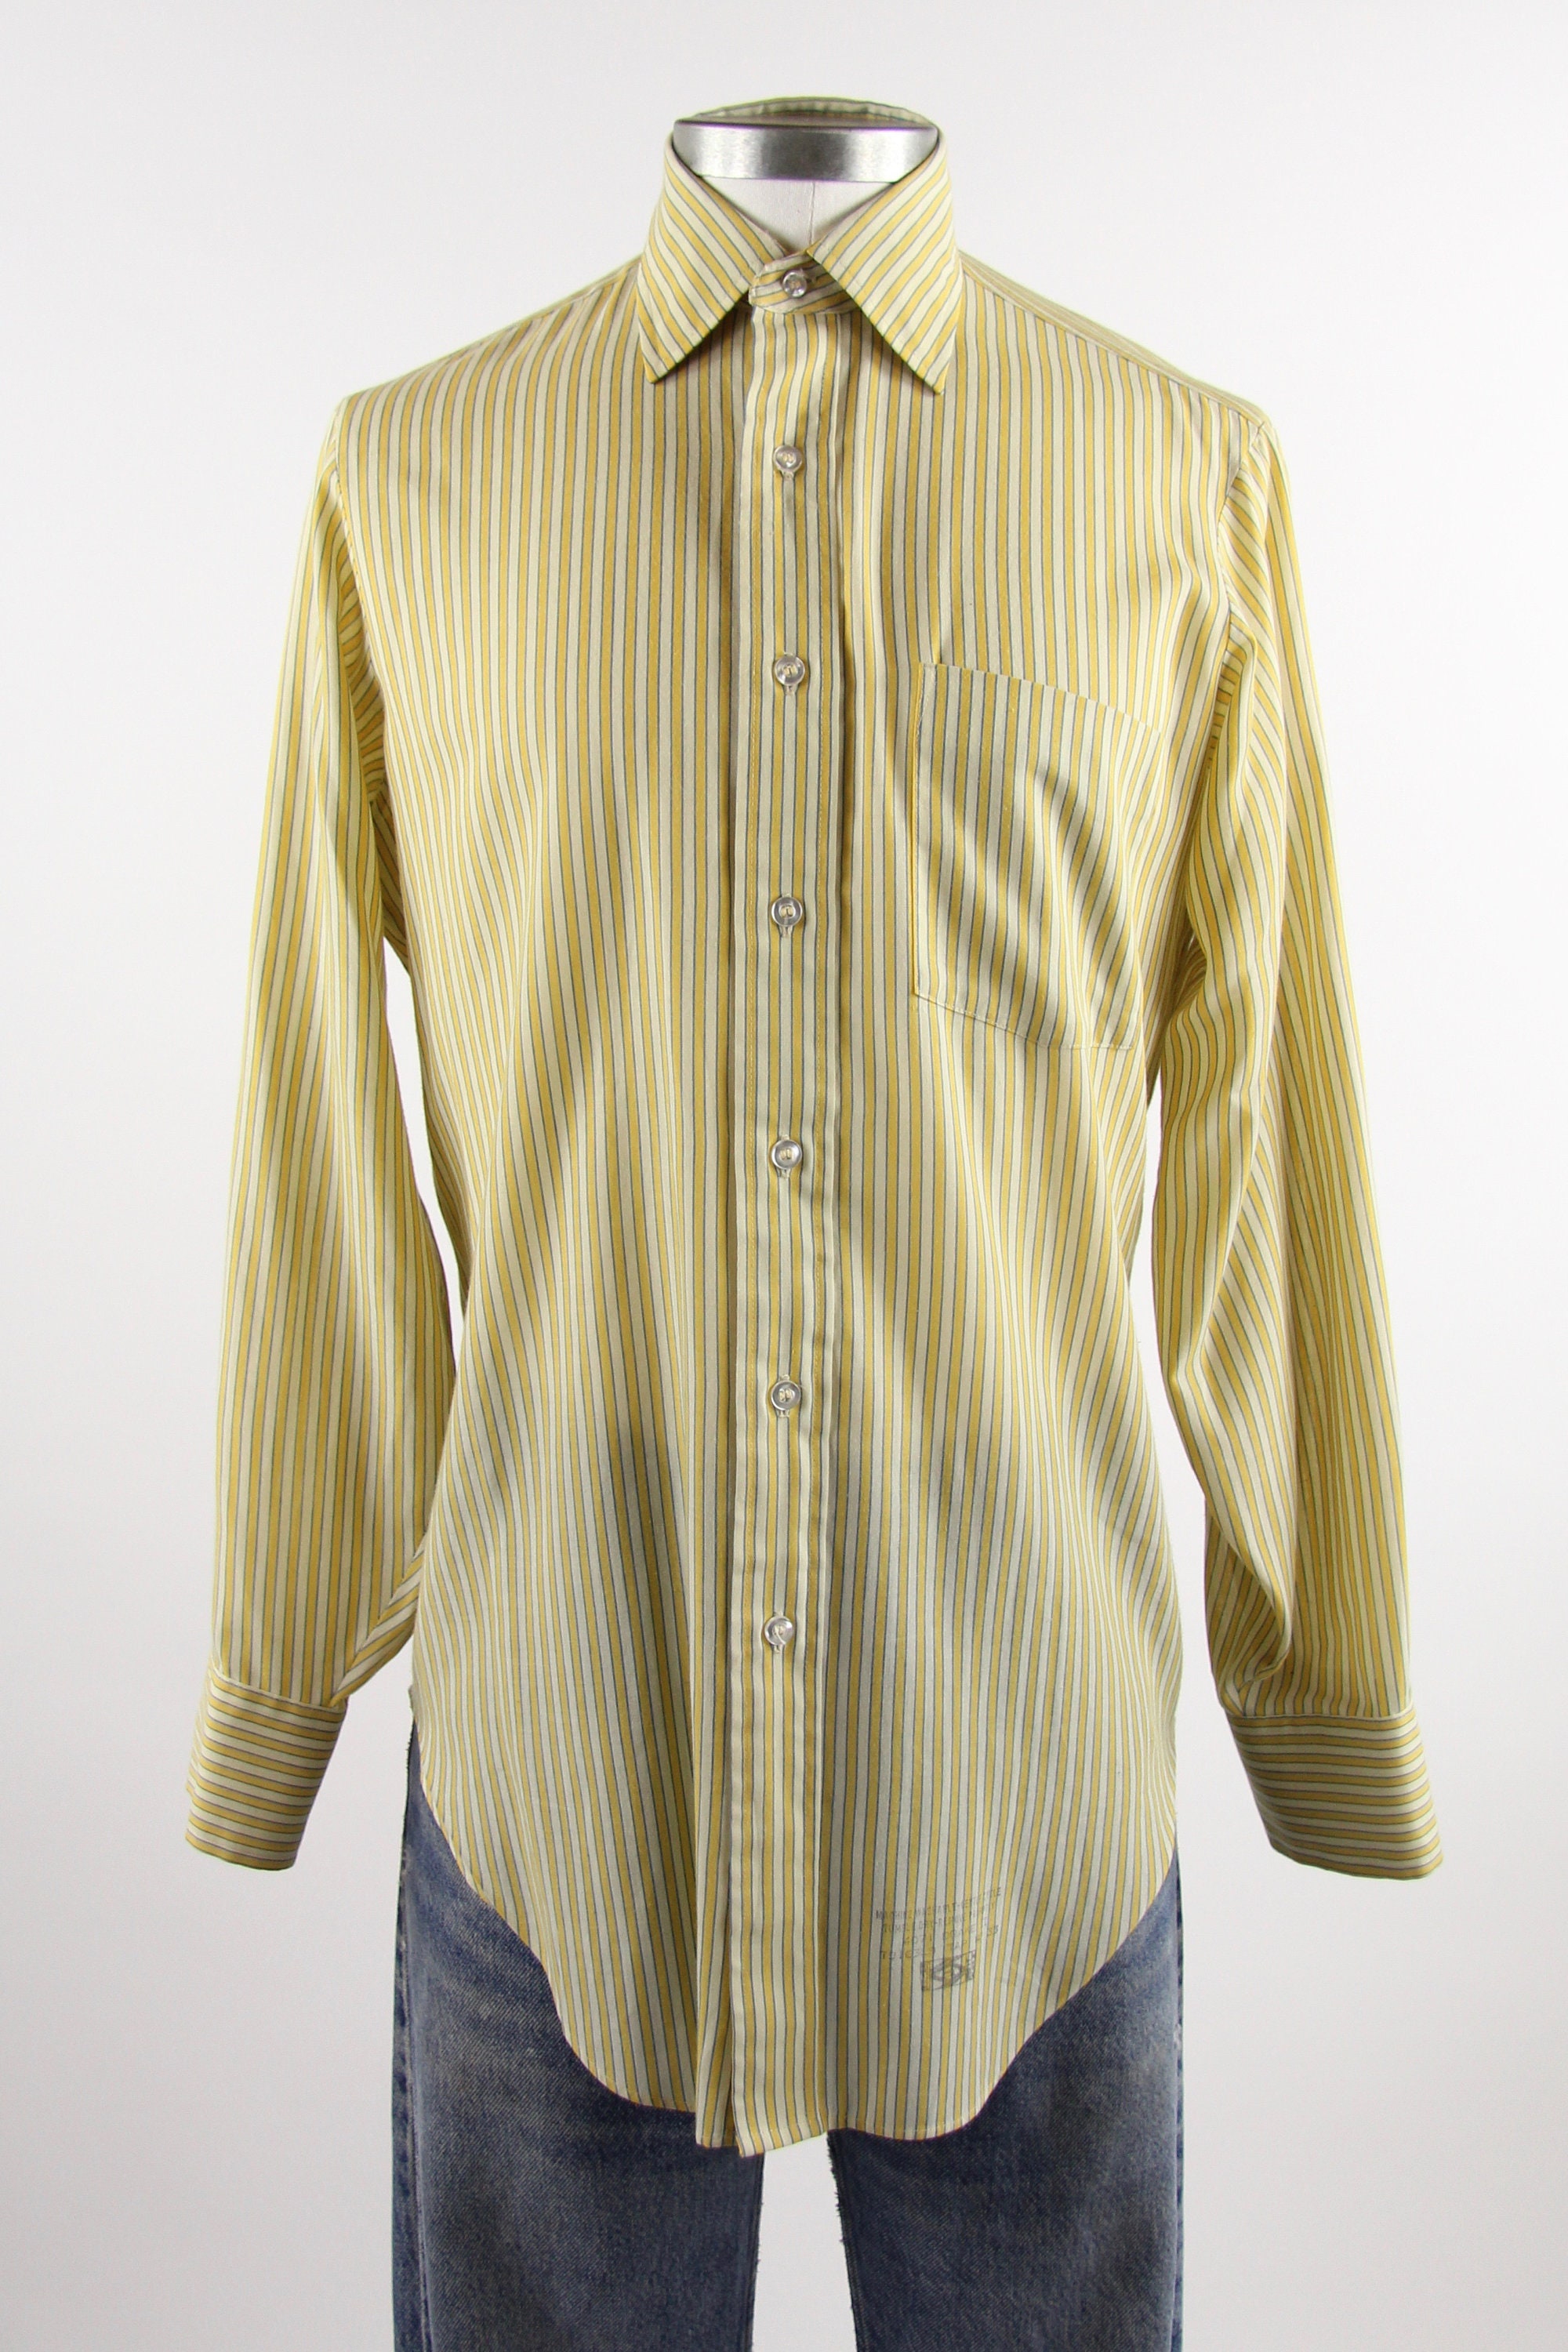 Arrow Men's Shirt Striped Yellow Vintage 60's Soft Button Down Dress ...